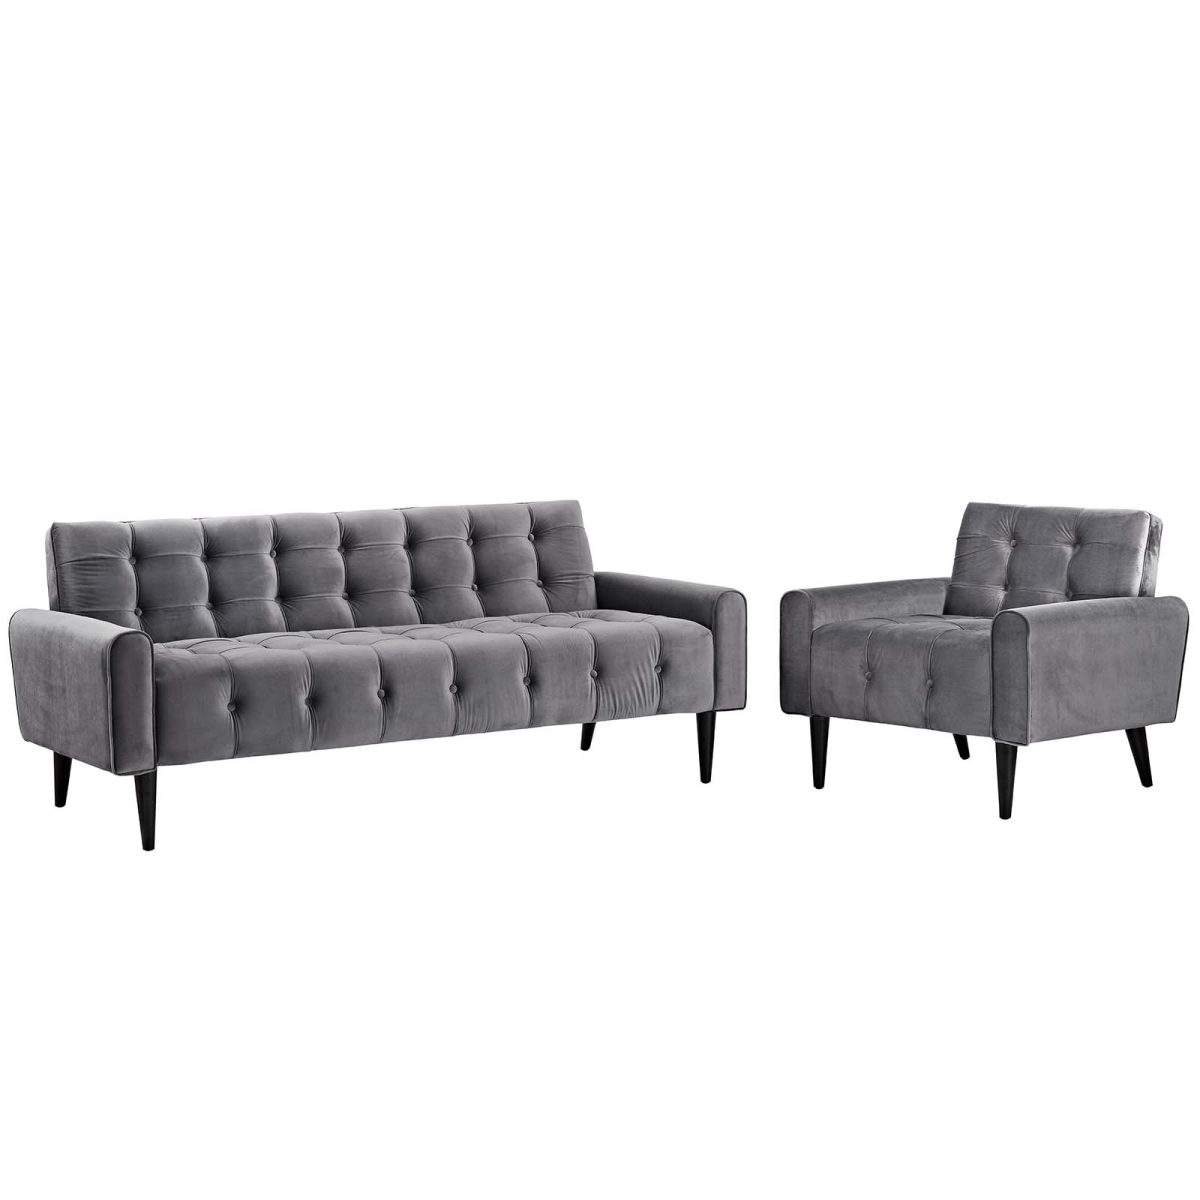 Eei-2969-gry-set Delve Living Room Set Velvet - Gray, 29 X 32 X 31.5 In. - Set Of 2